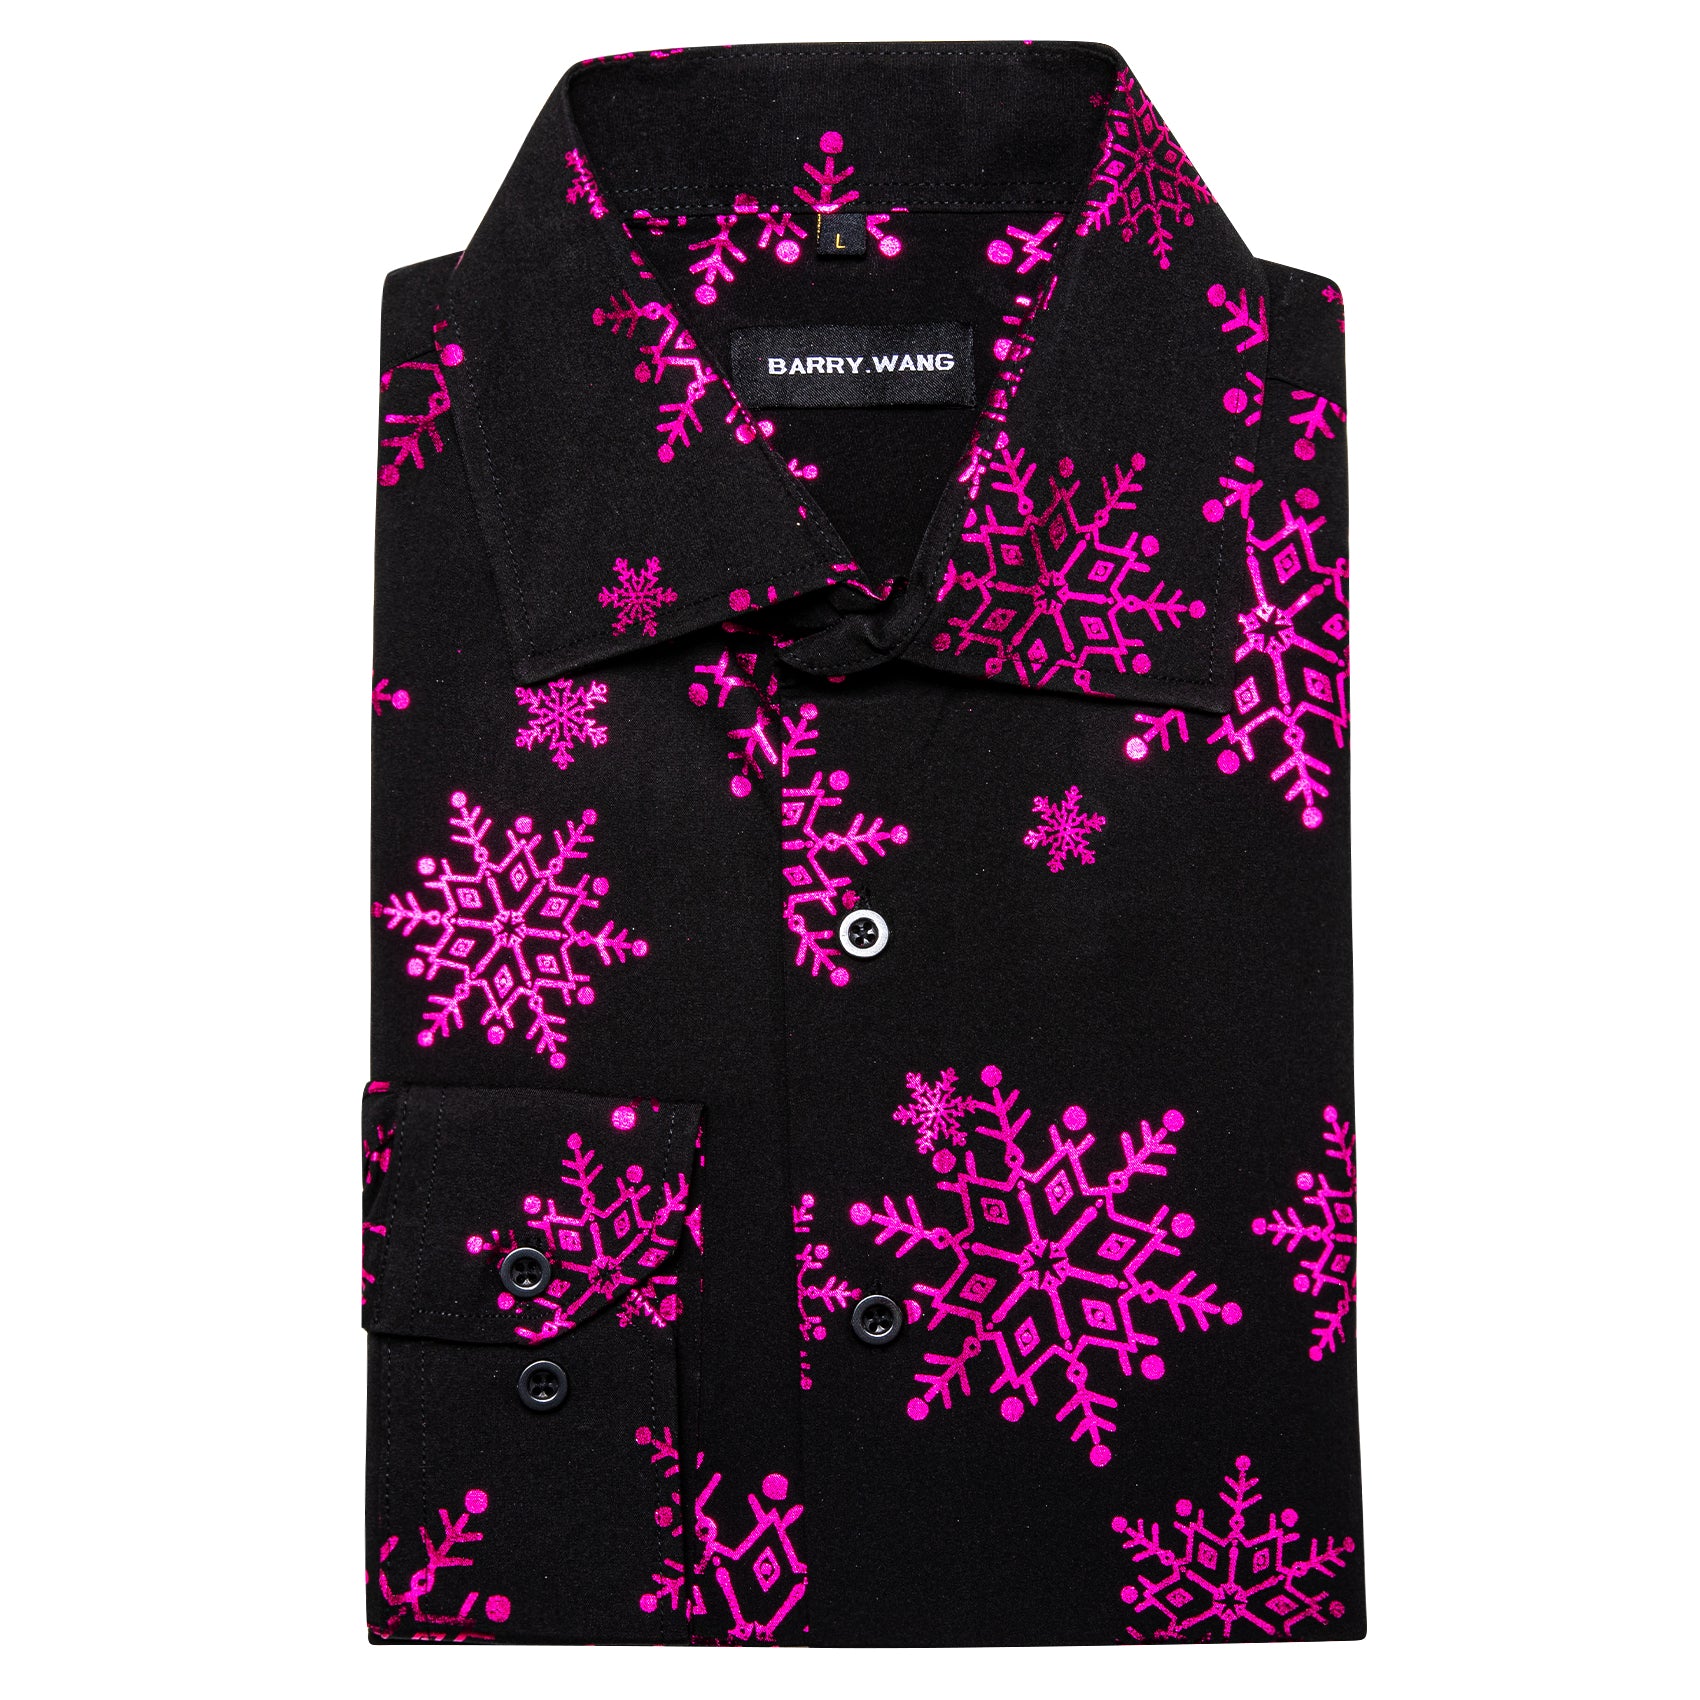 Barry.wang Christmas Black Rose Red Snowflake Floral Silk Shirt